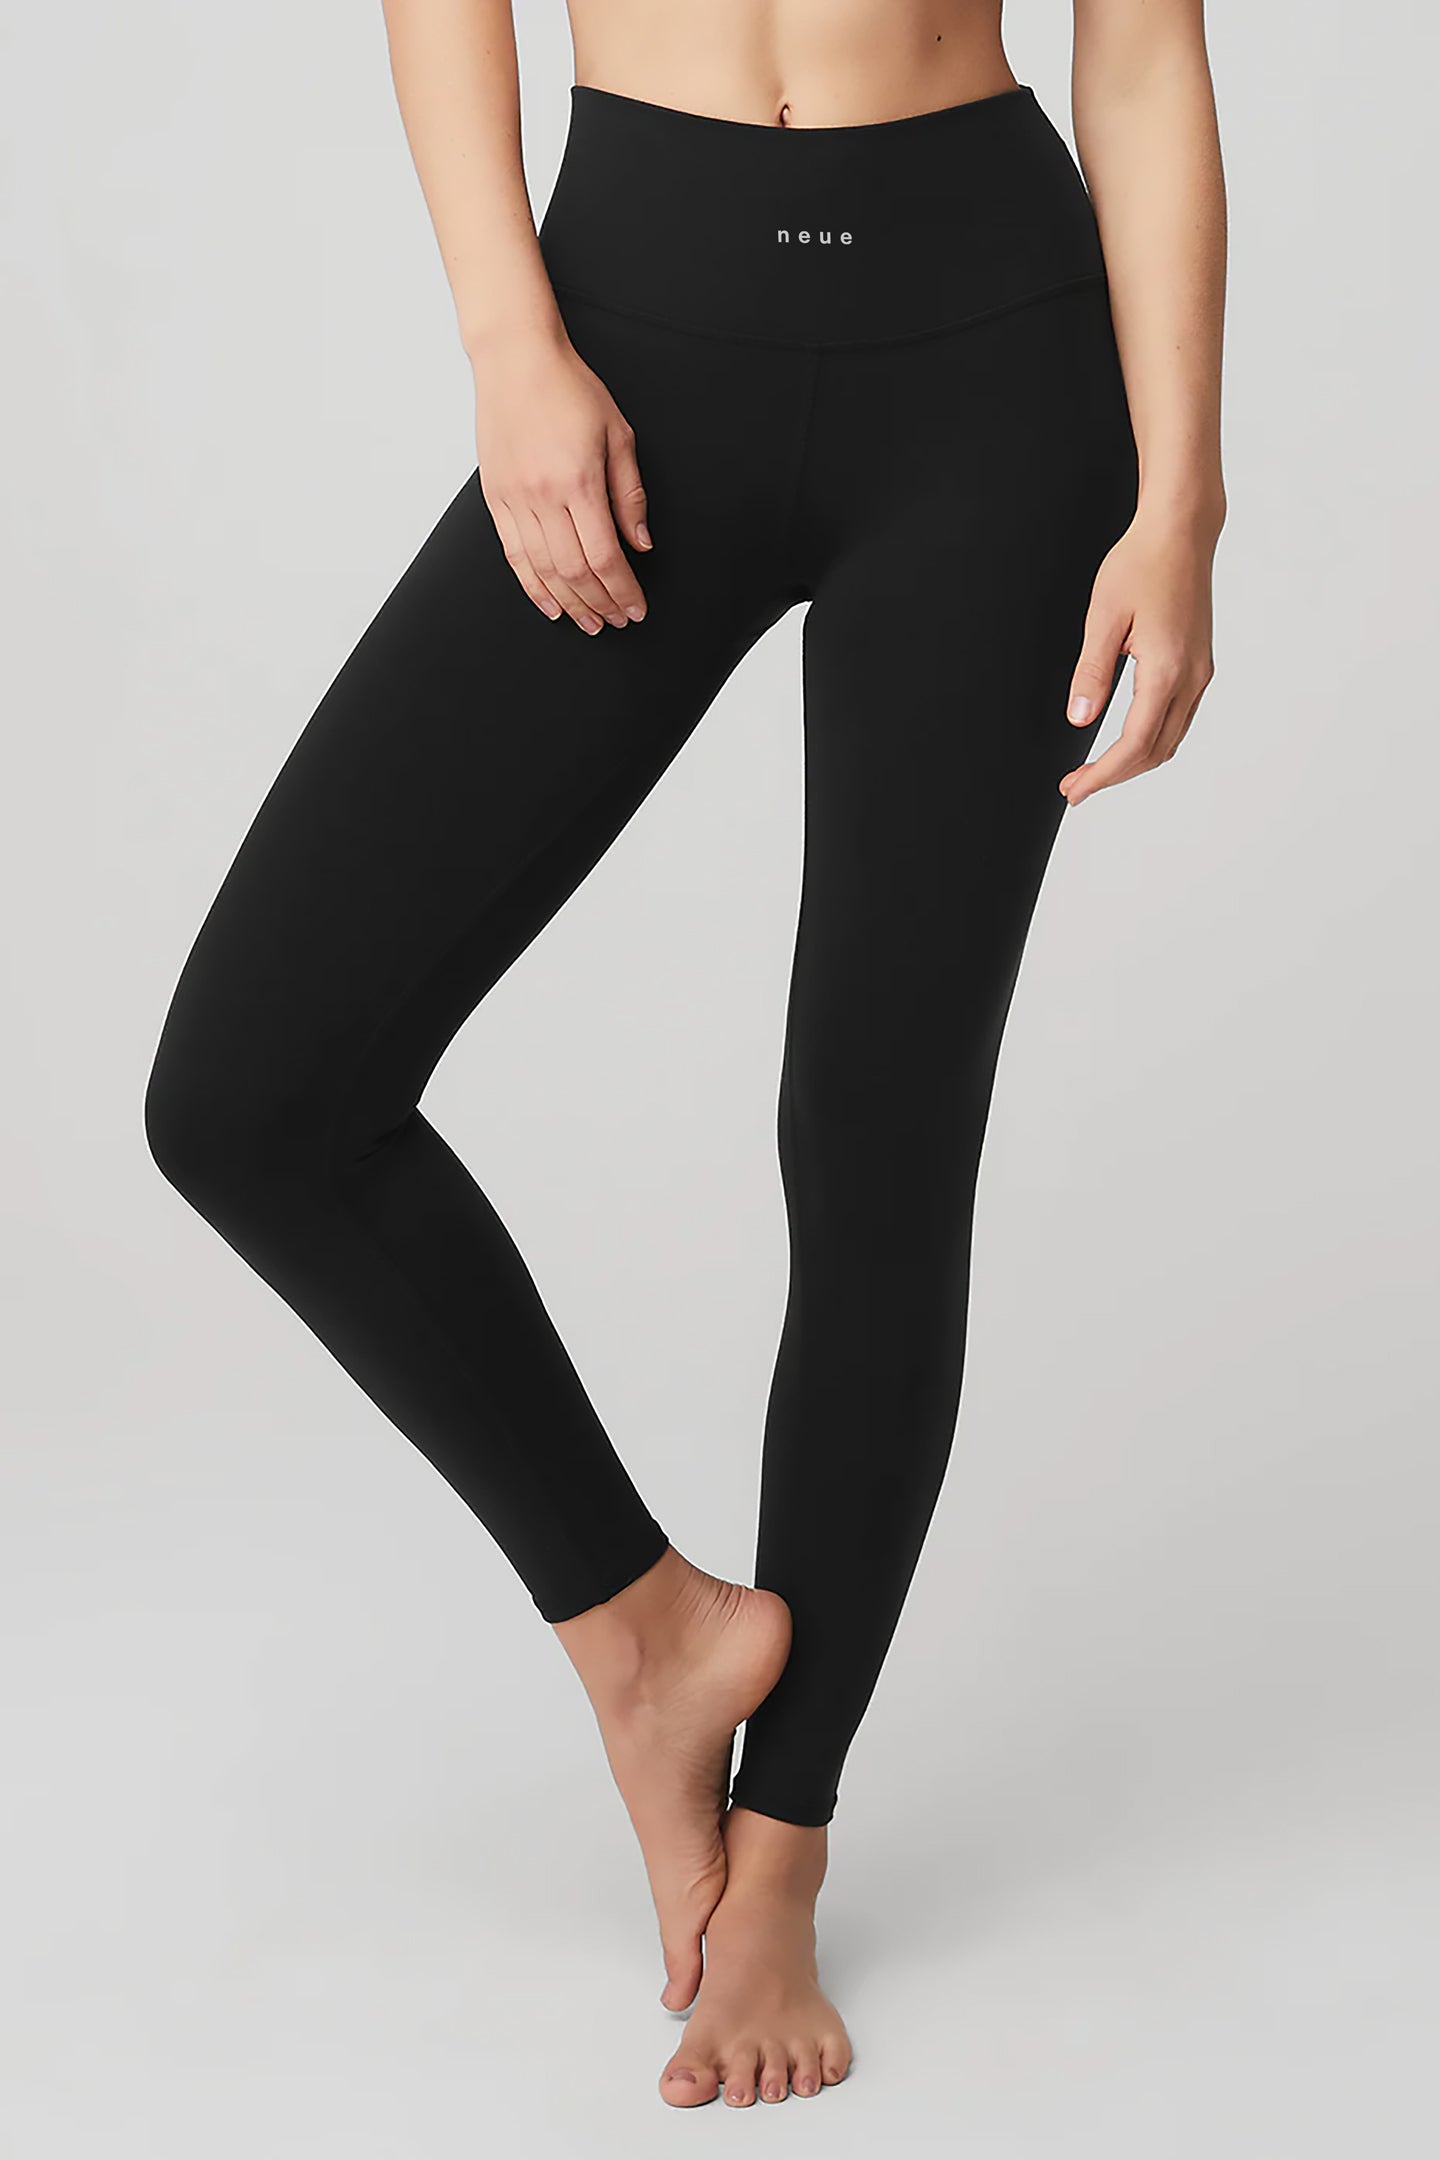 New Balance Yoga Pants Sz L Black Polyester Stretch Fitted YGI N2-36 